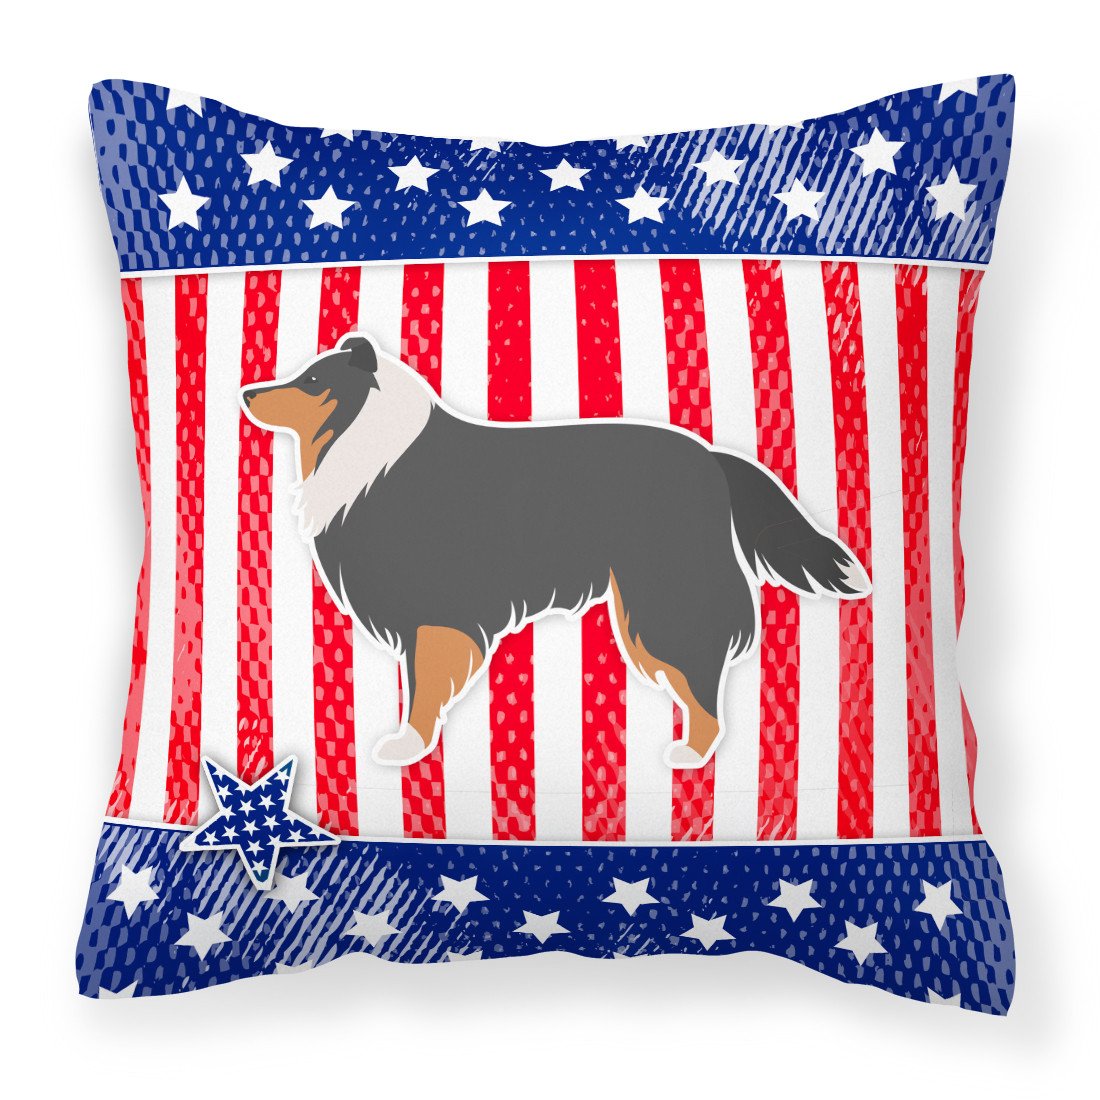 USA Patriotic Sheltie/Shetland Sheepdog Fabric Decorative Pillow BB3330PW1818 by Caroline's Treasures